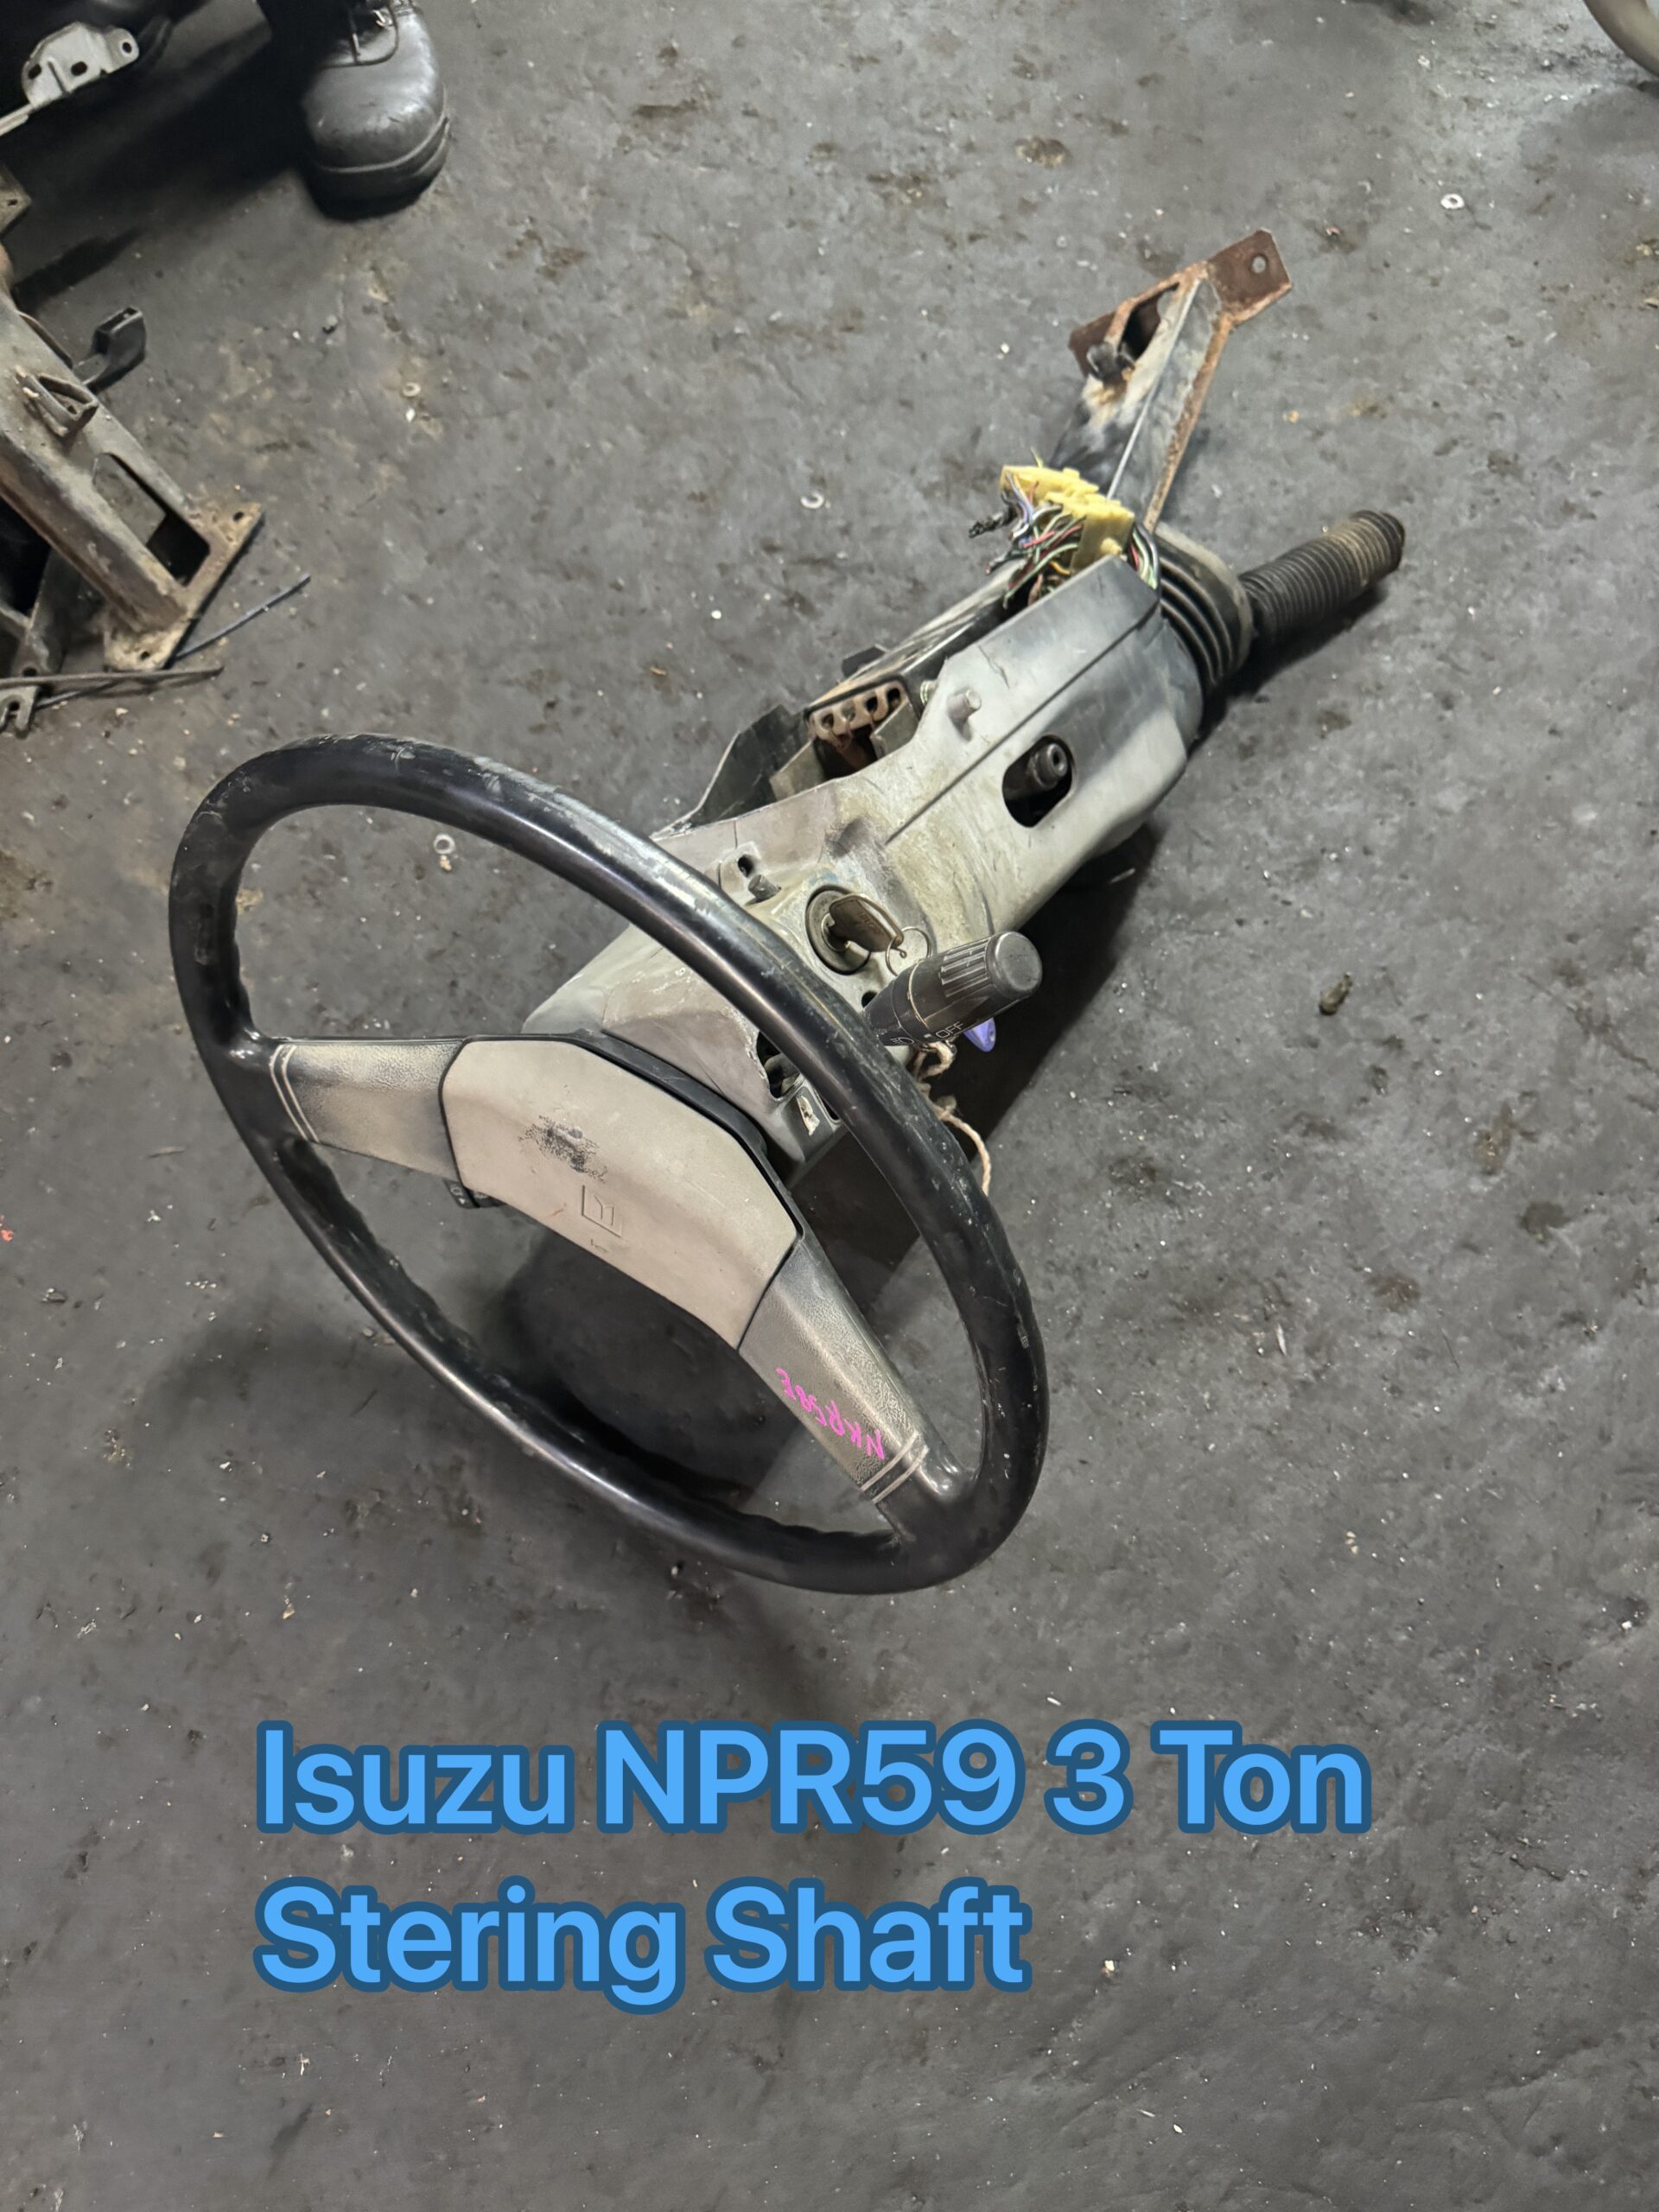 Isuzu NPR59 3 Ton Stering Shaft